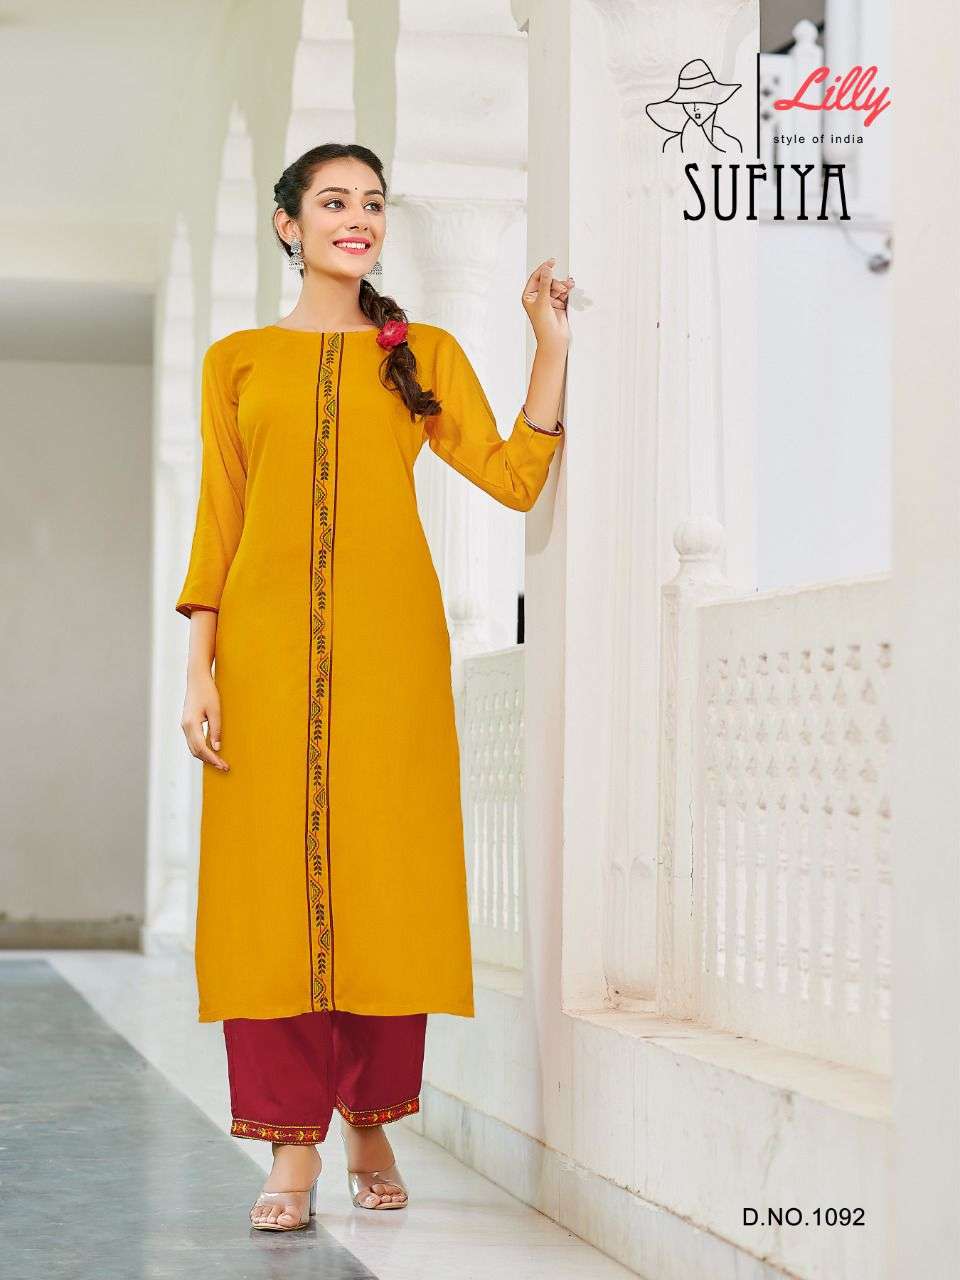 lilly sufiya trendy designer kurti cataloguue online supplier surat